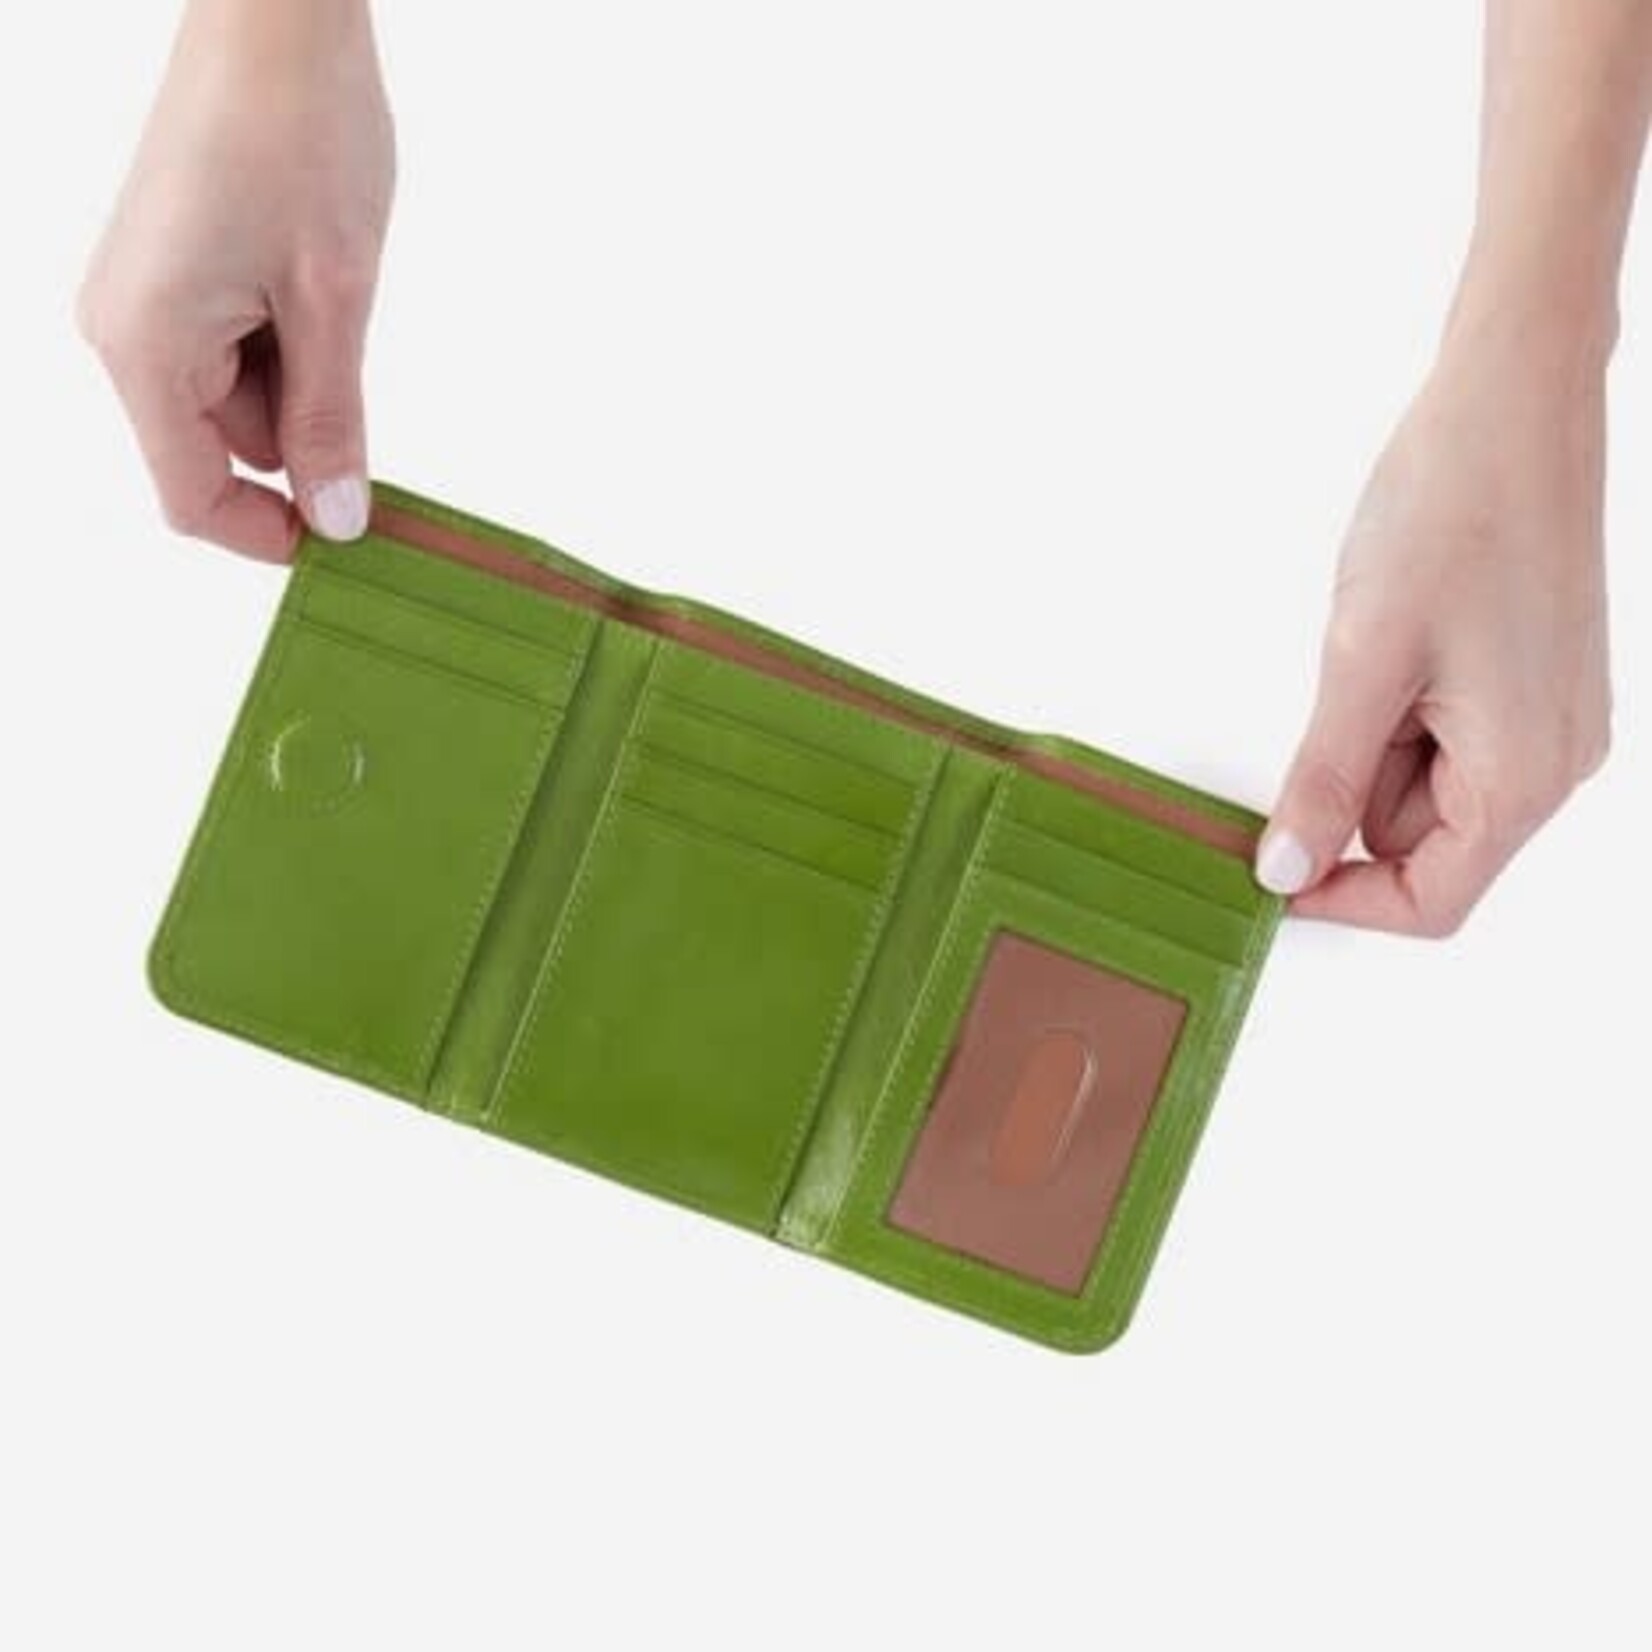 HOBO Jill Trifold Polished Leather Wallet in Garden Green